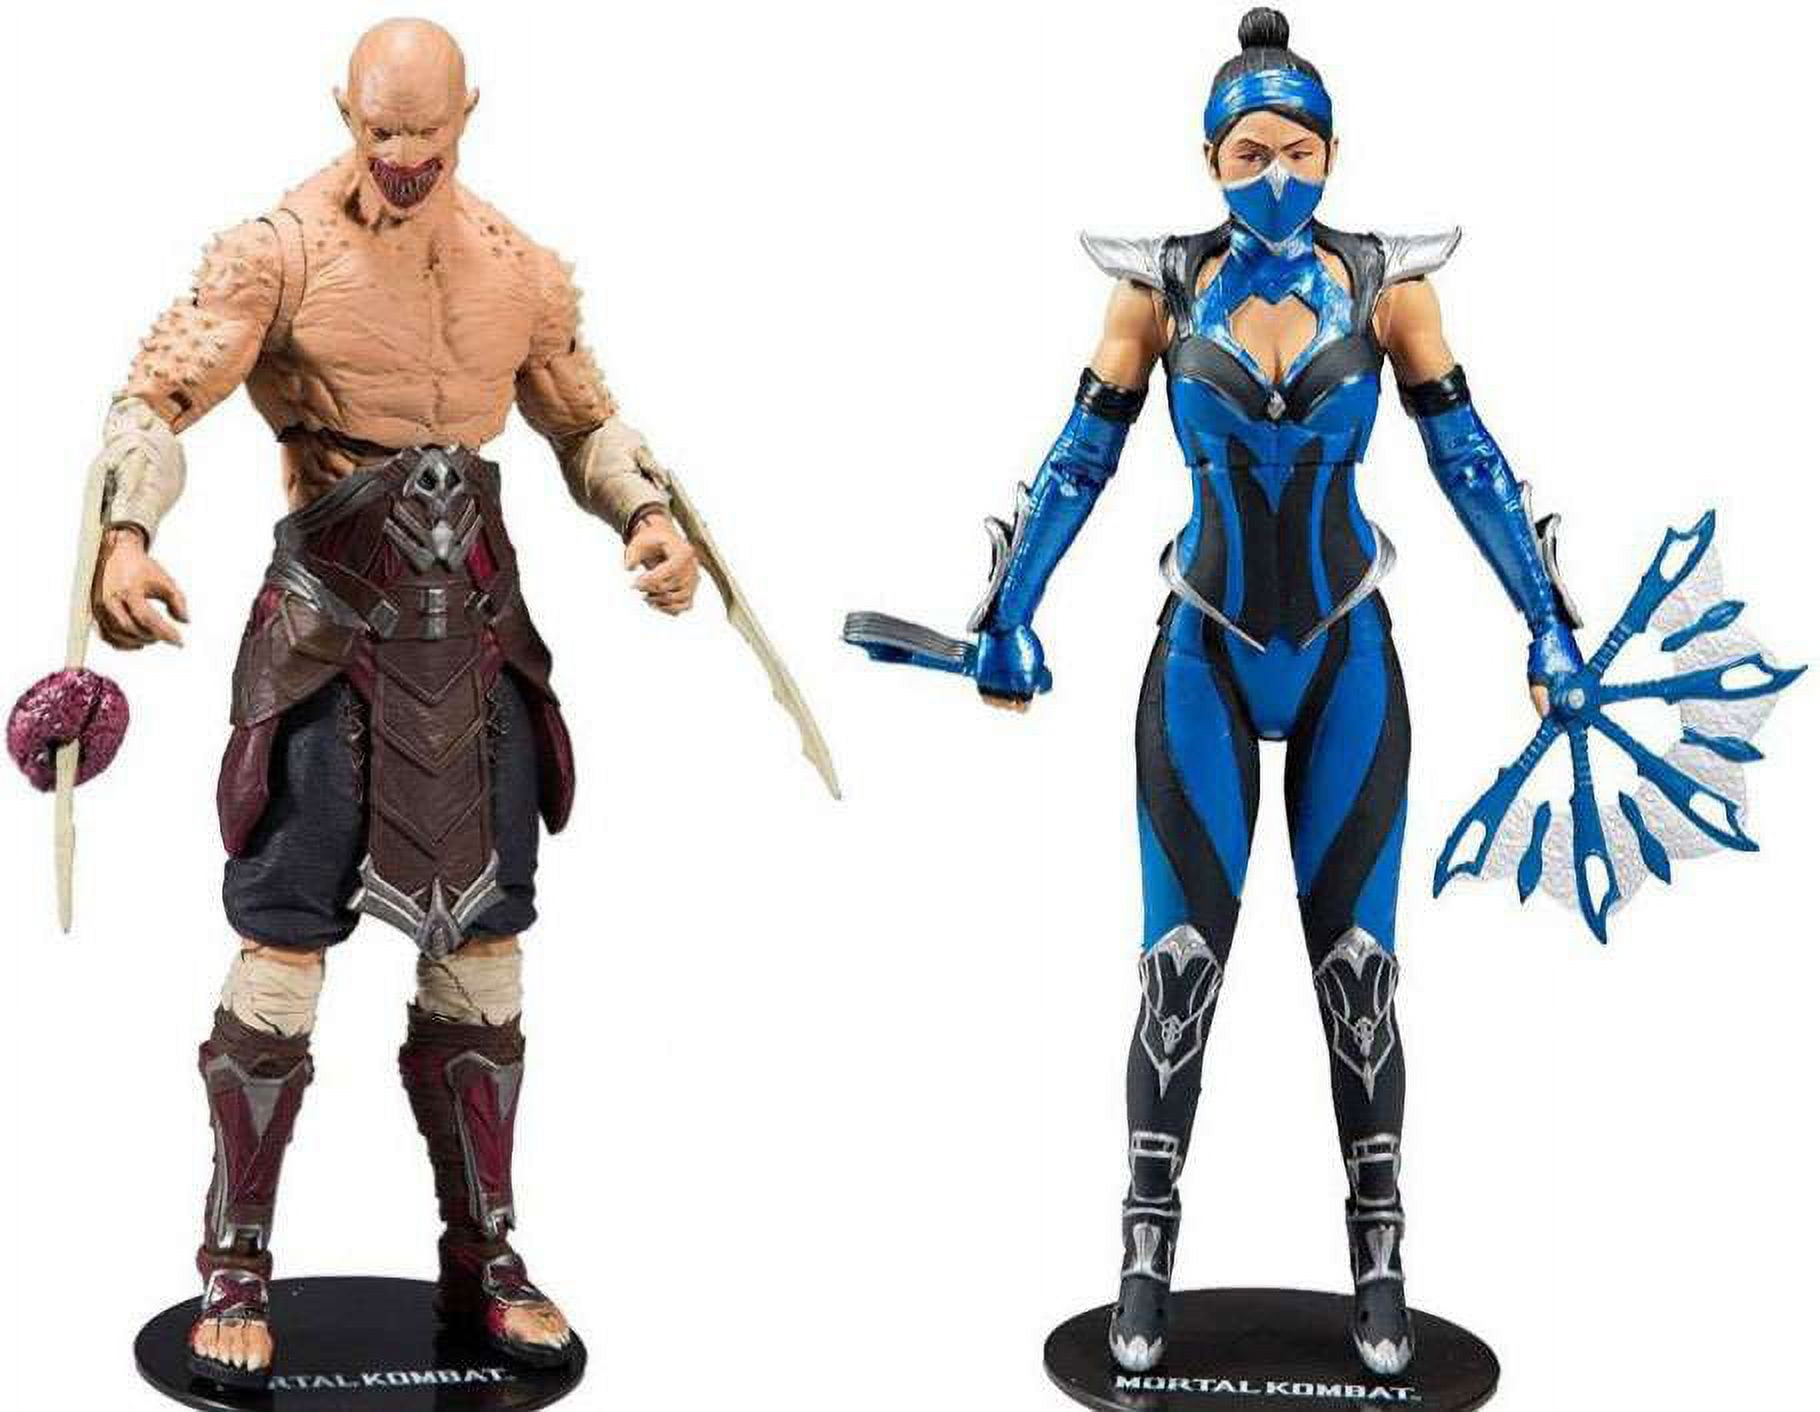 Baraka & Kitana Join McFarlane's Mortal Kombat Collection